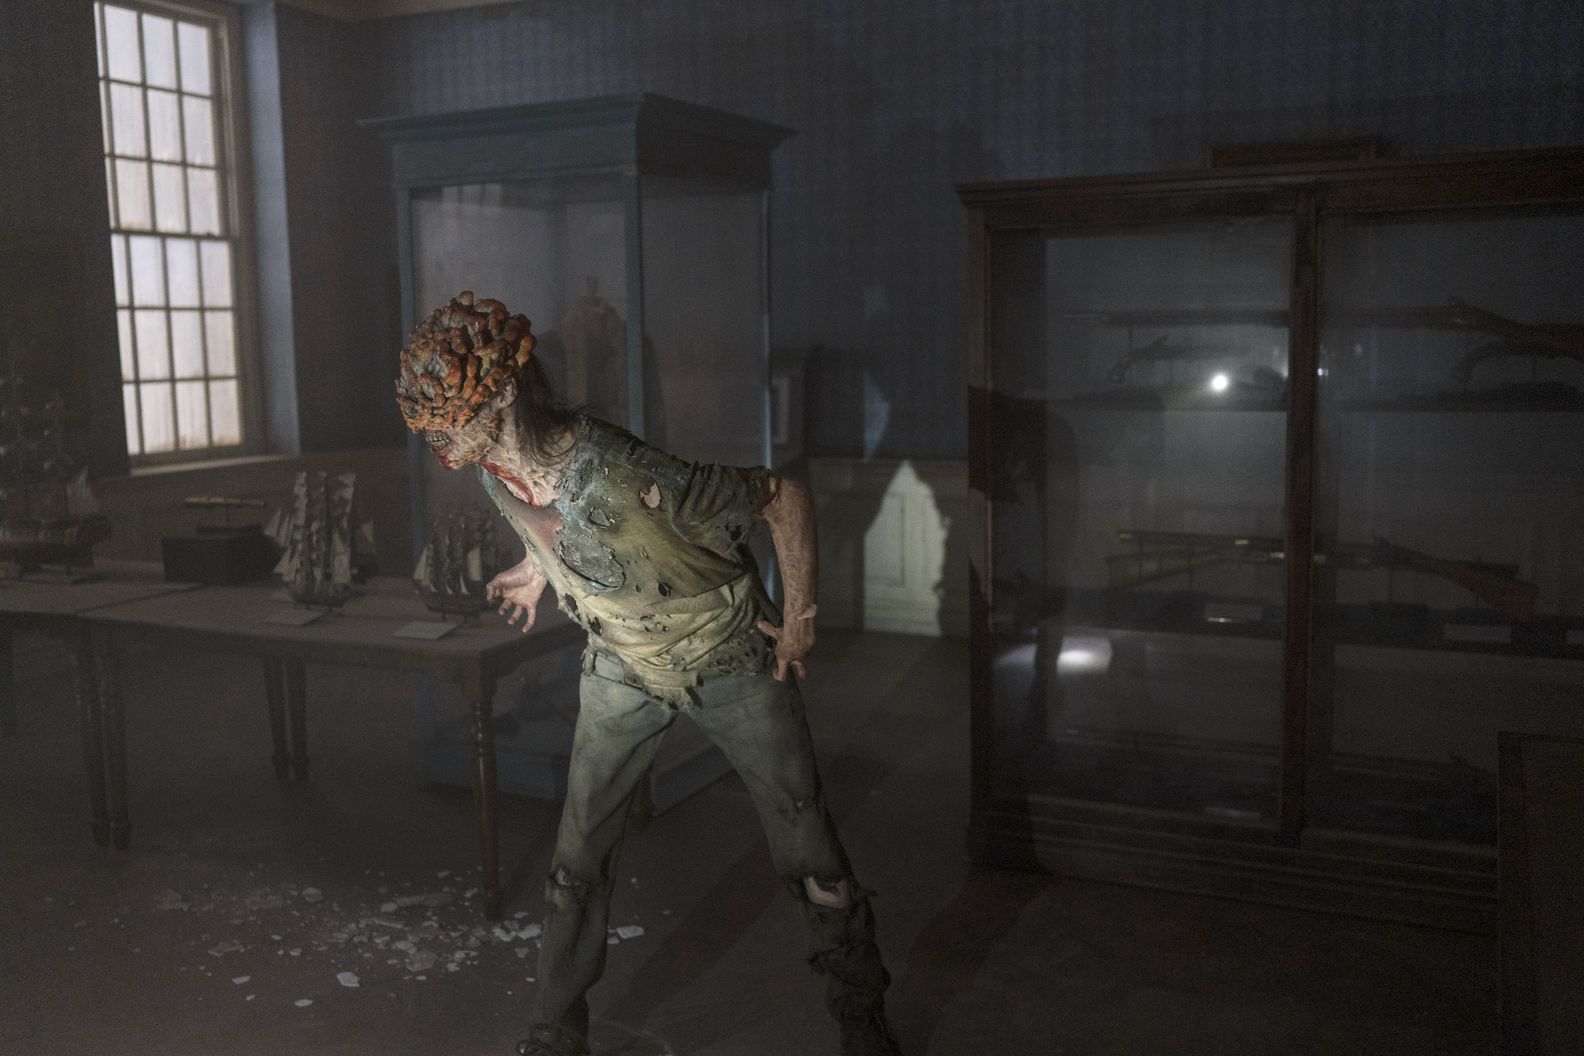 Is Joel dead in The Last Of Us? Episode six ending explained